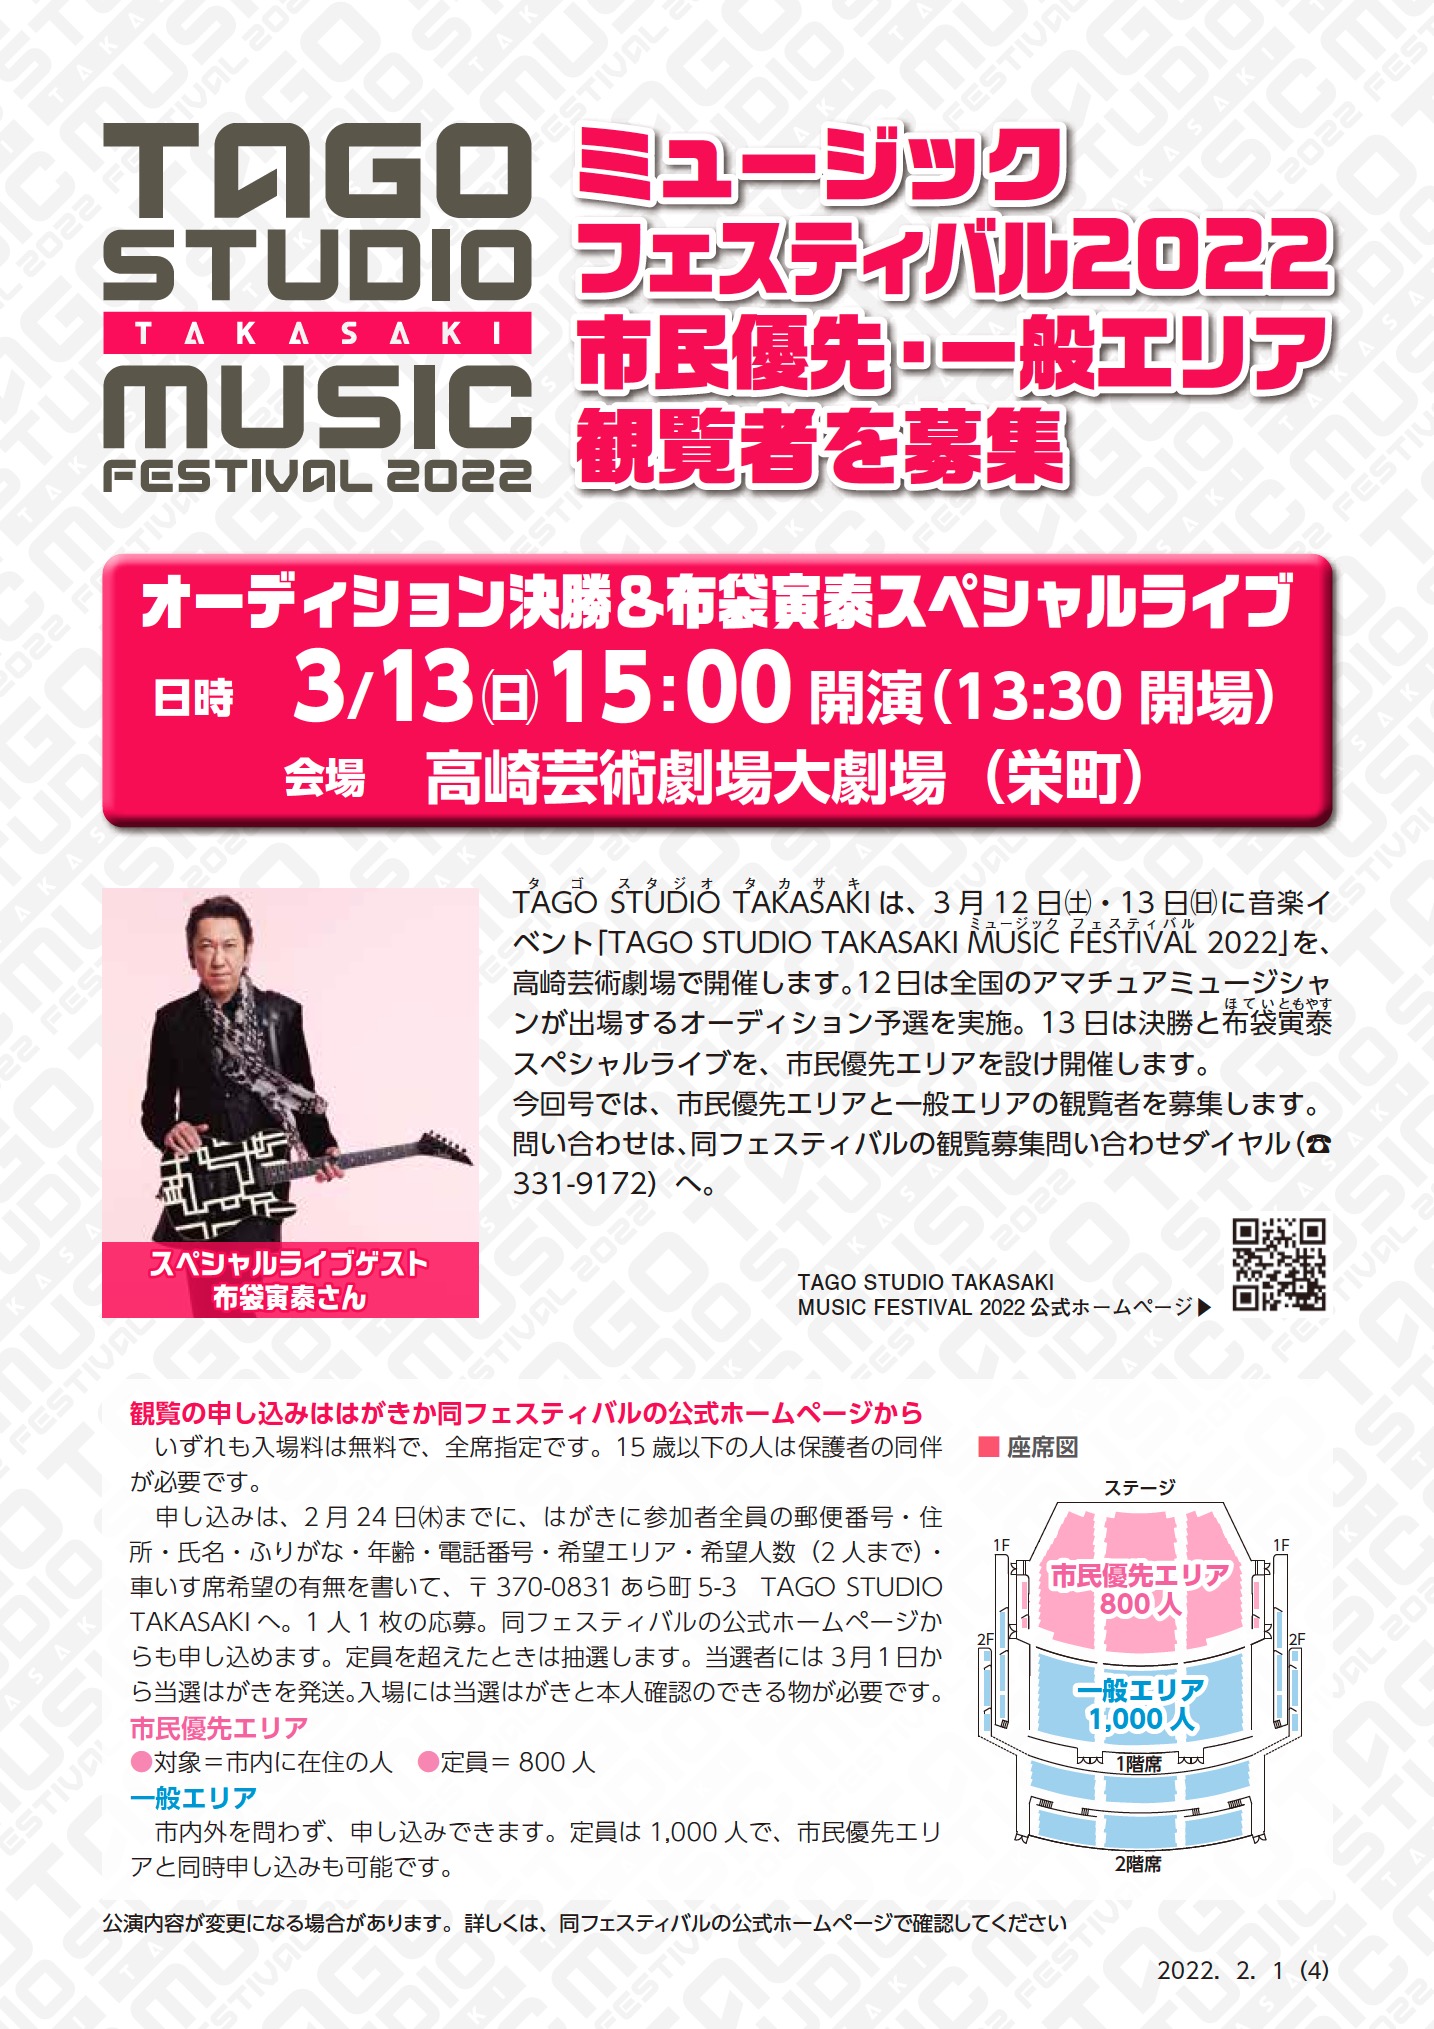 TAGO STUDIO TAKASAKI MUSIC FESTIVAL 2022 市民優先・一般エリア観戦者を募集 (PDF)